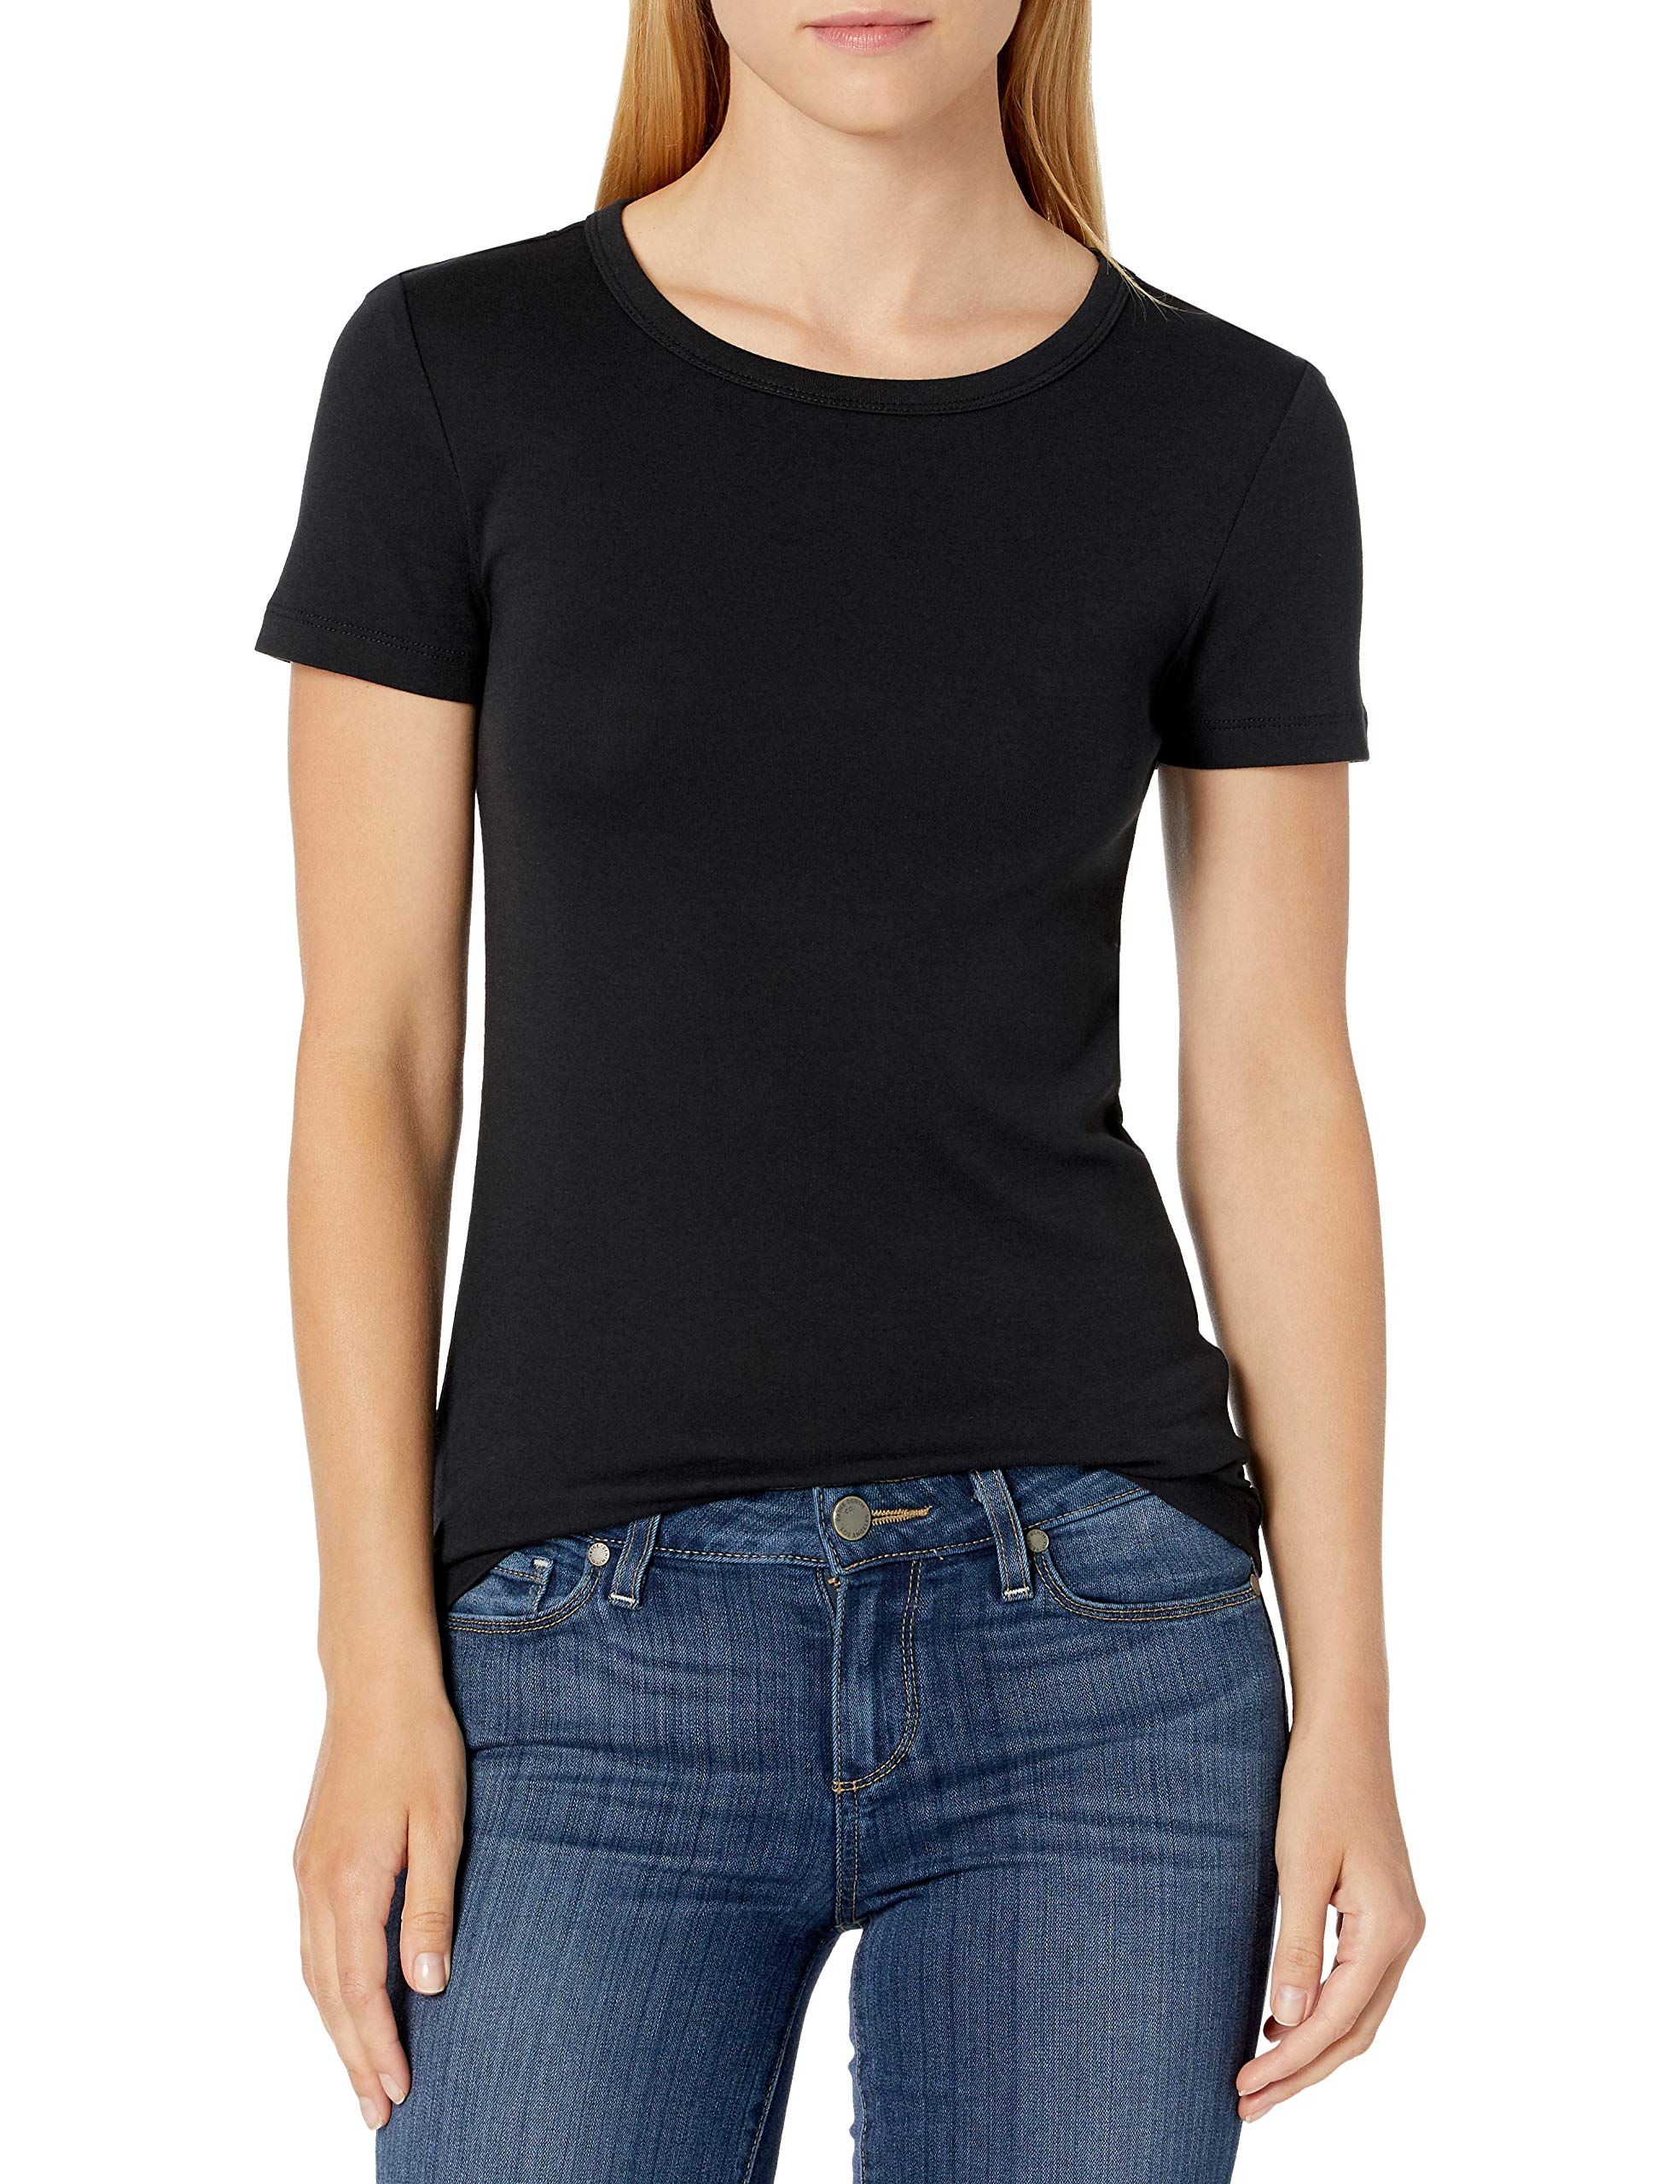 Amazon Essentials Women's Slim-Fit Short-Sleeve Crewneck T-Shirt, Pack of 2